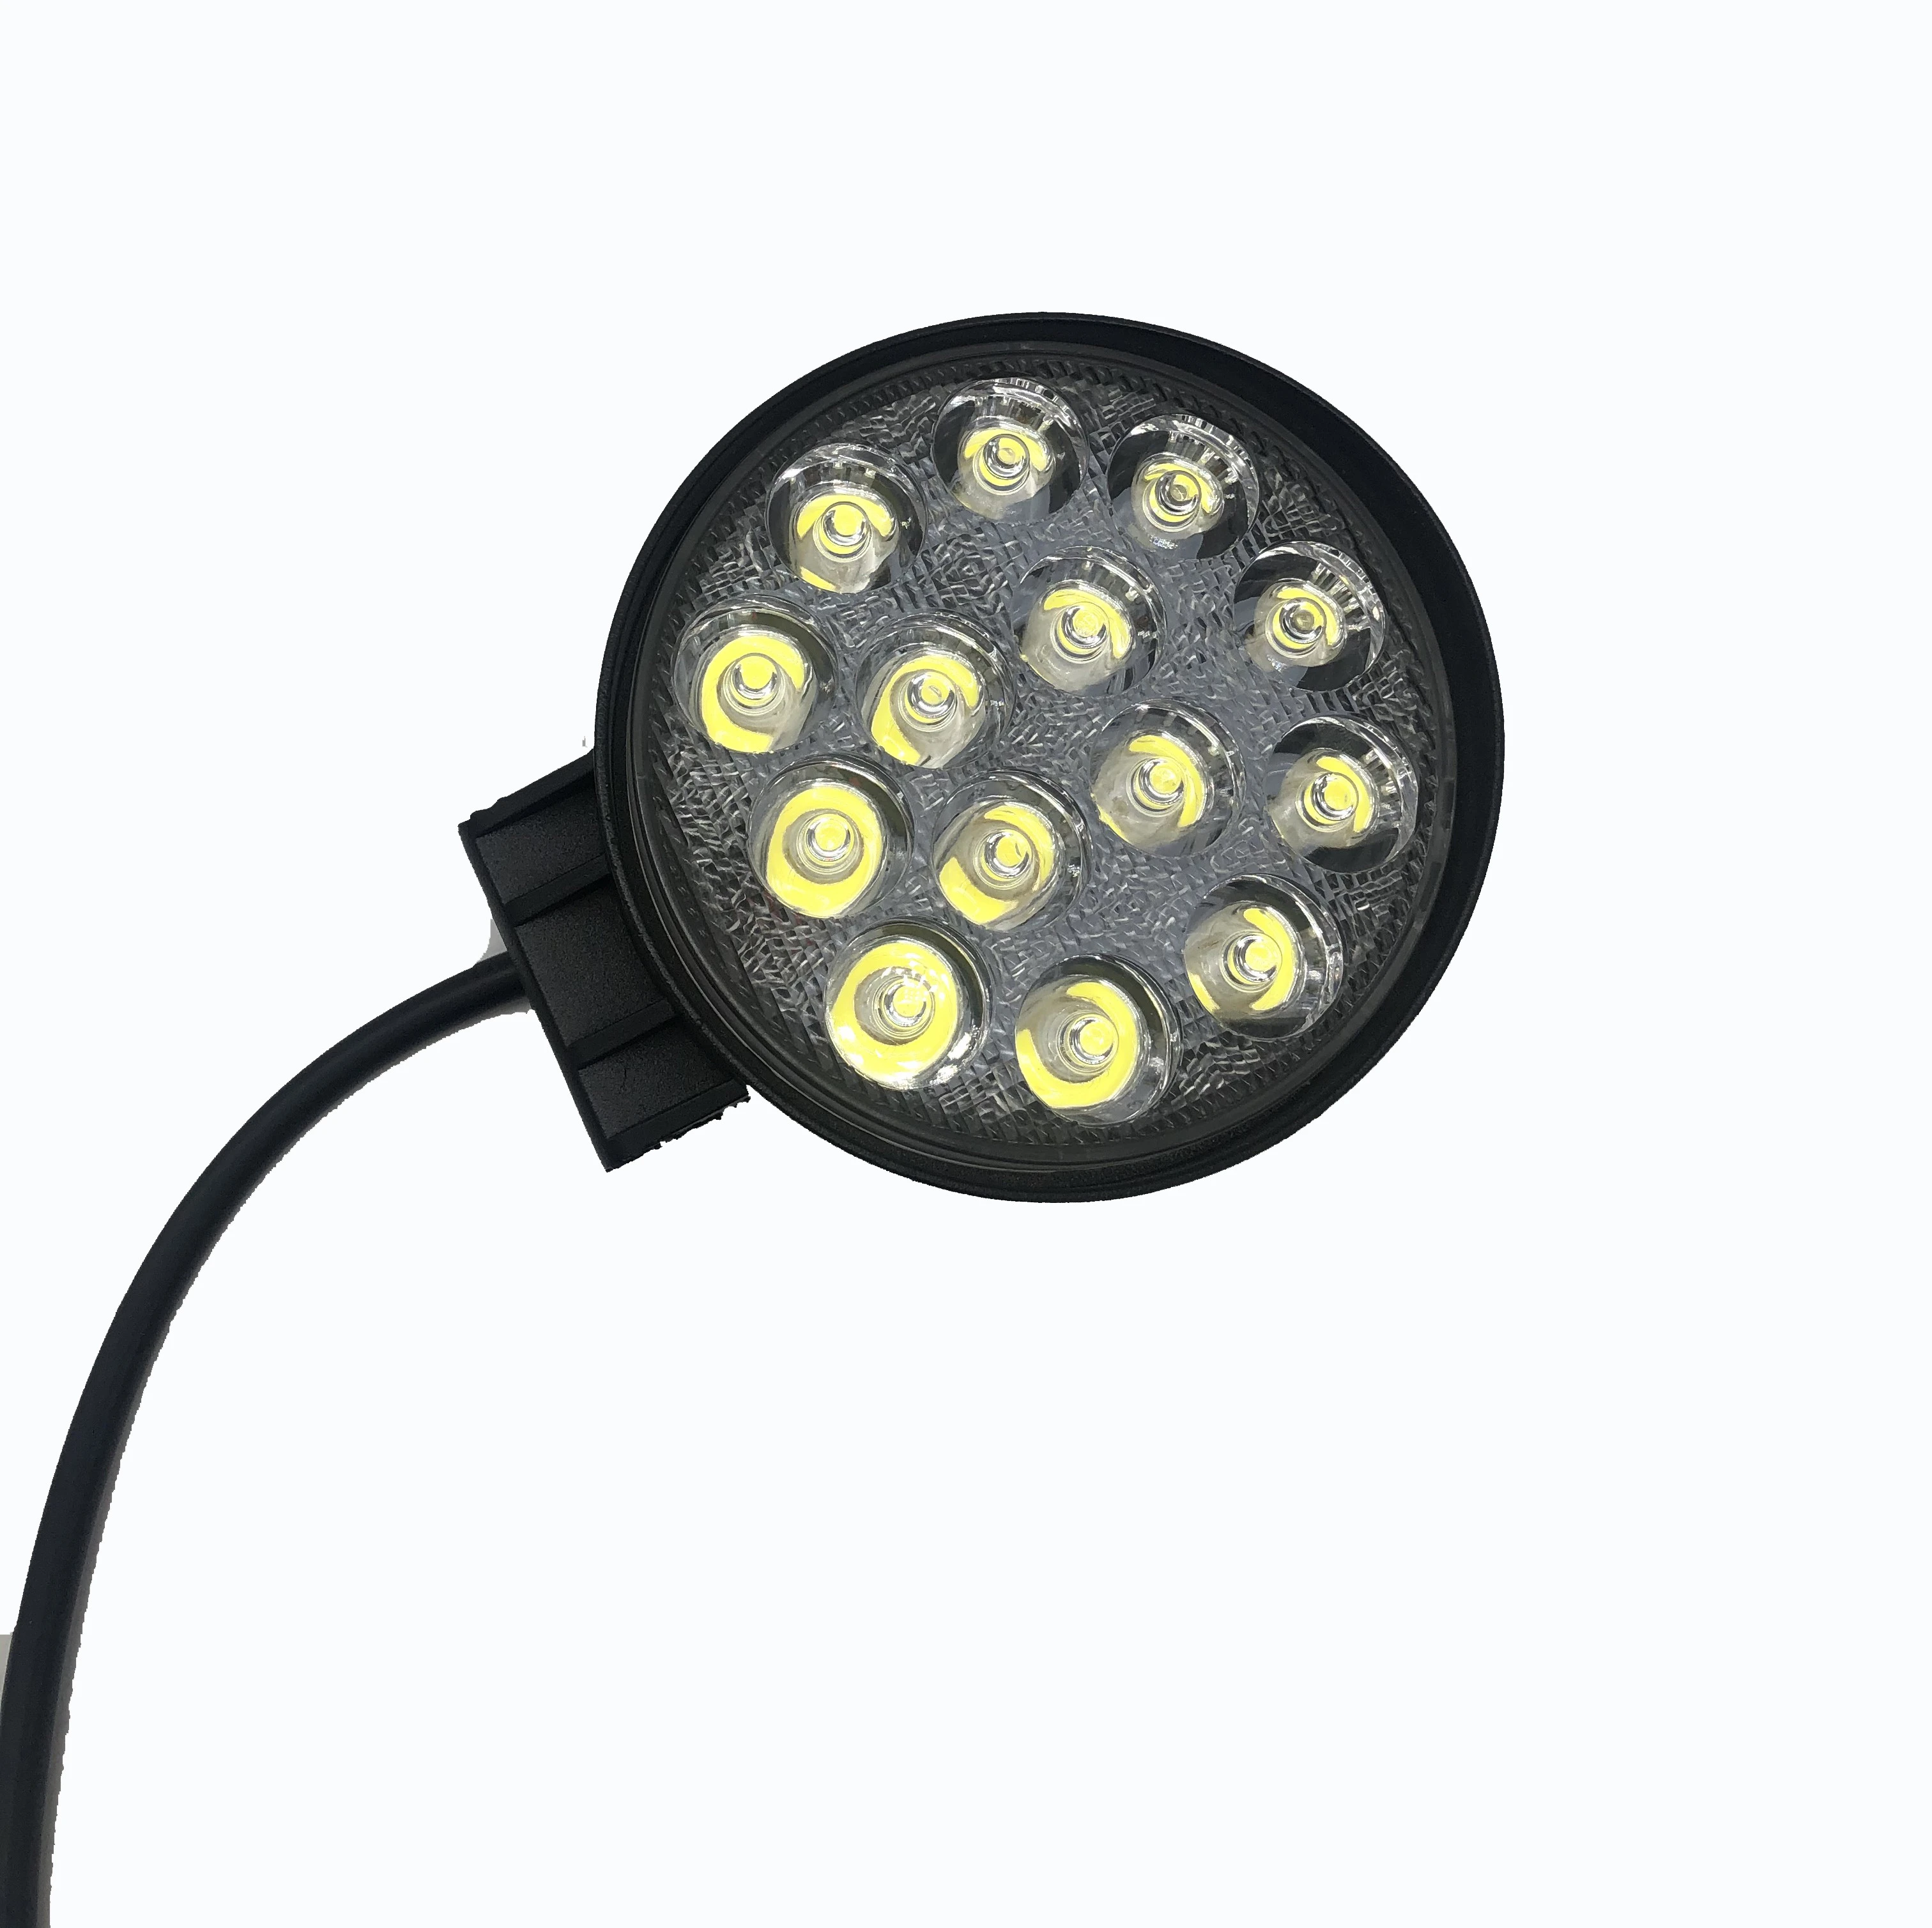 TACPRO warm white led work light automotive lighting rechargeable 42w round work lamp fog light